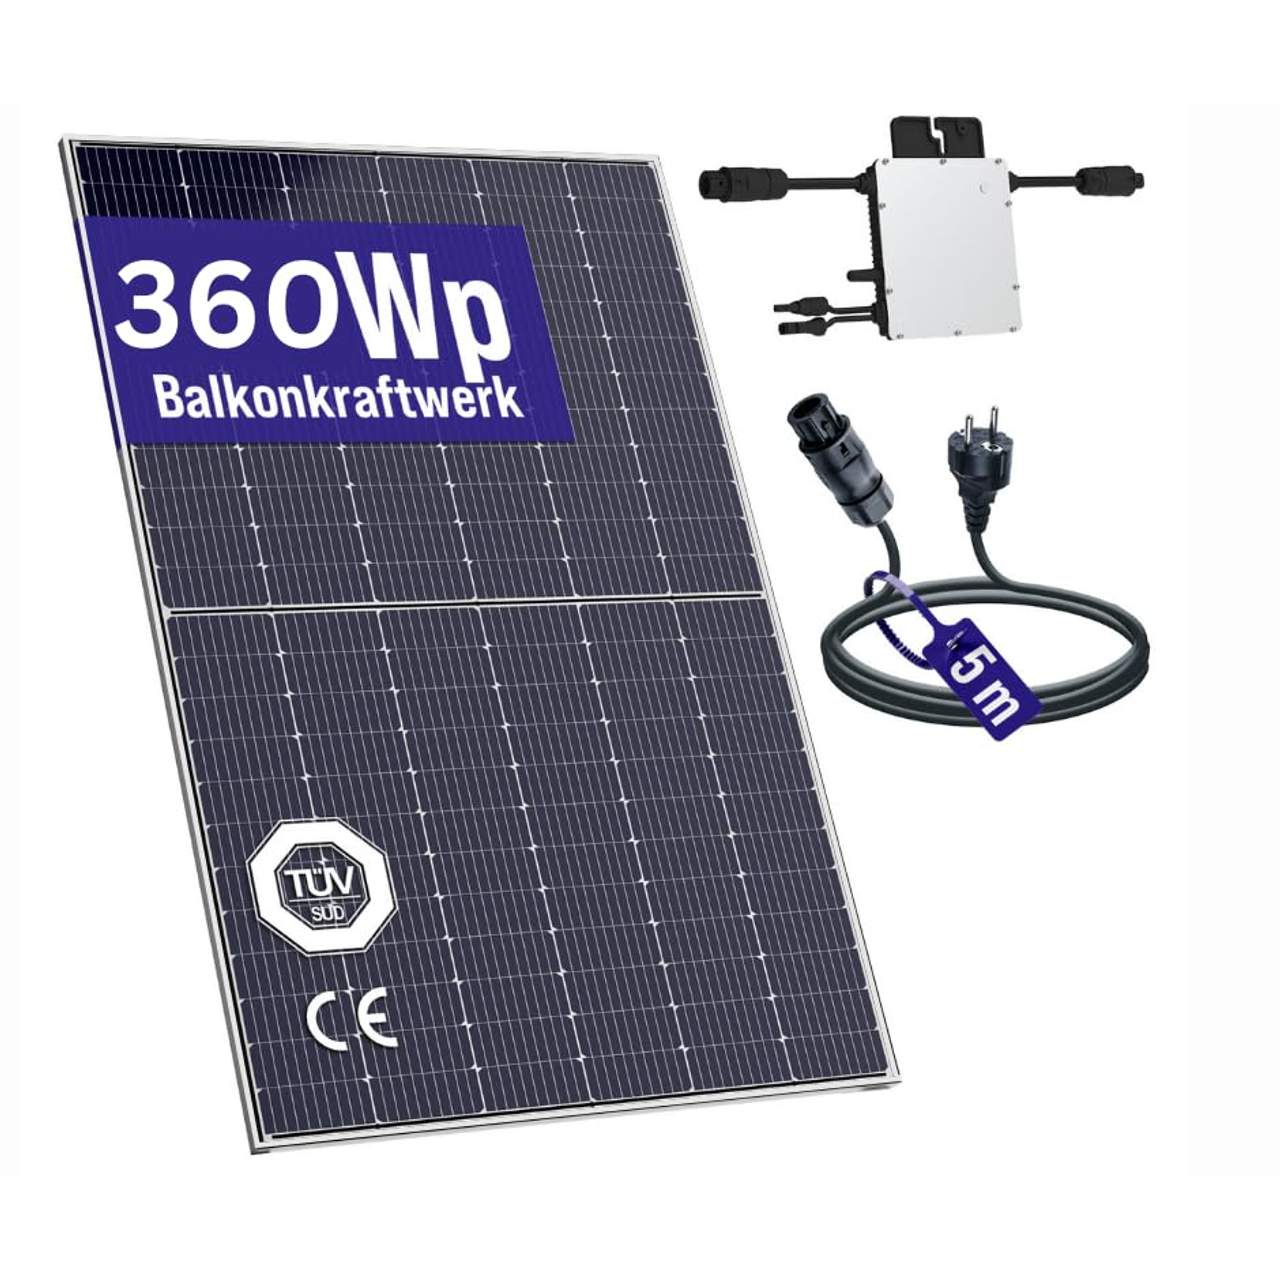 volks-energie Mini-Solaranlage 330Wp